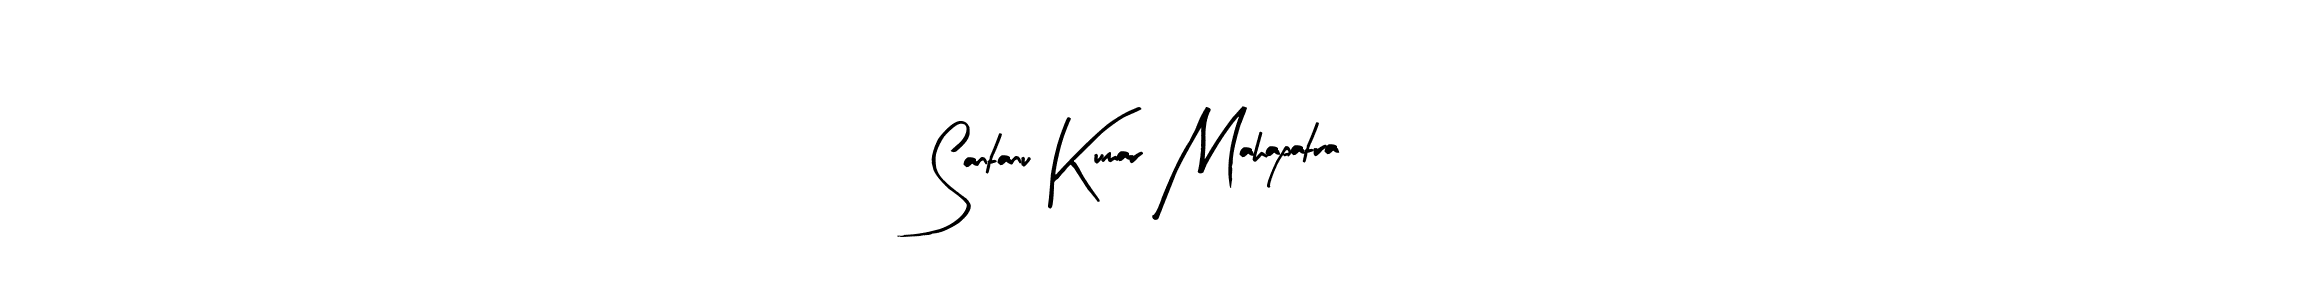 Use a signature maker to create a handwritten signature online. With this signature software, you can design (Arty Signature) your own signature for name Santanu Kumar Mahapatra. Santanu Kumar Mahapatra signature style 8 images and pictures png